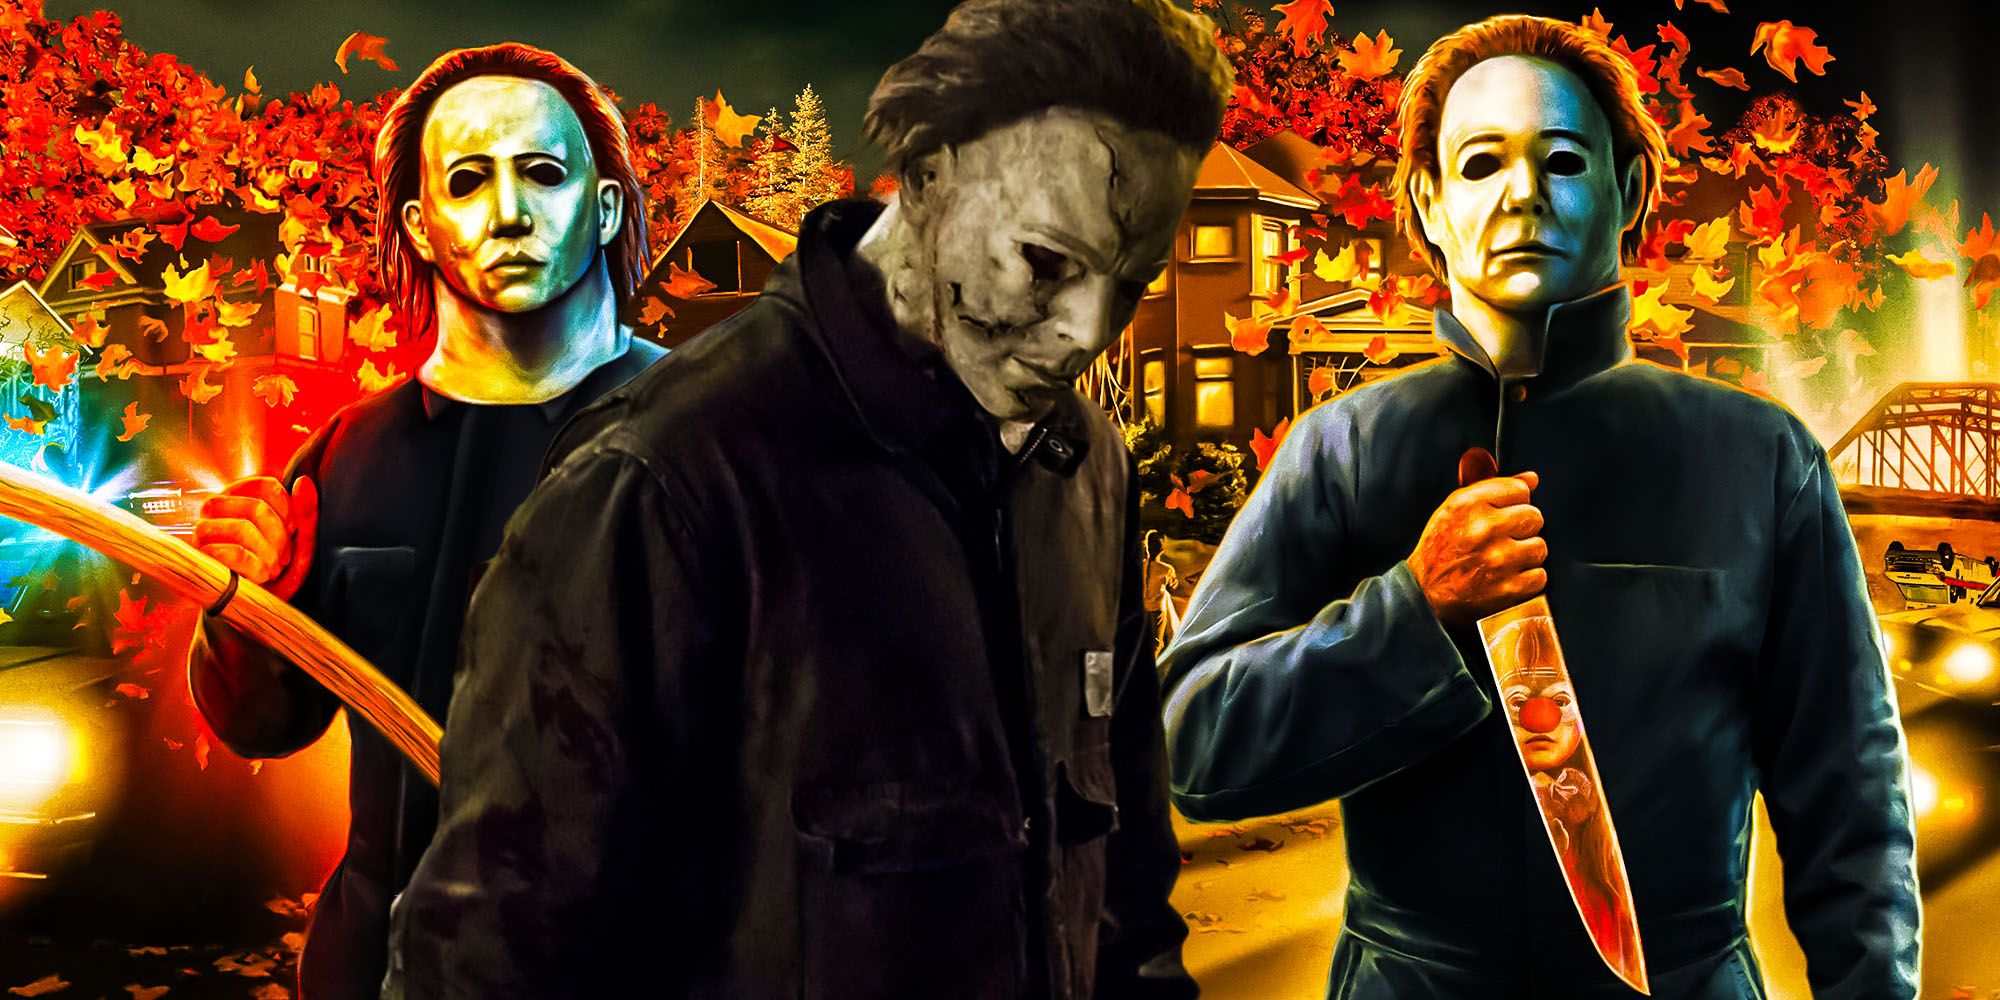 Unmade Halloween trilogy introduce halloween multiverse